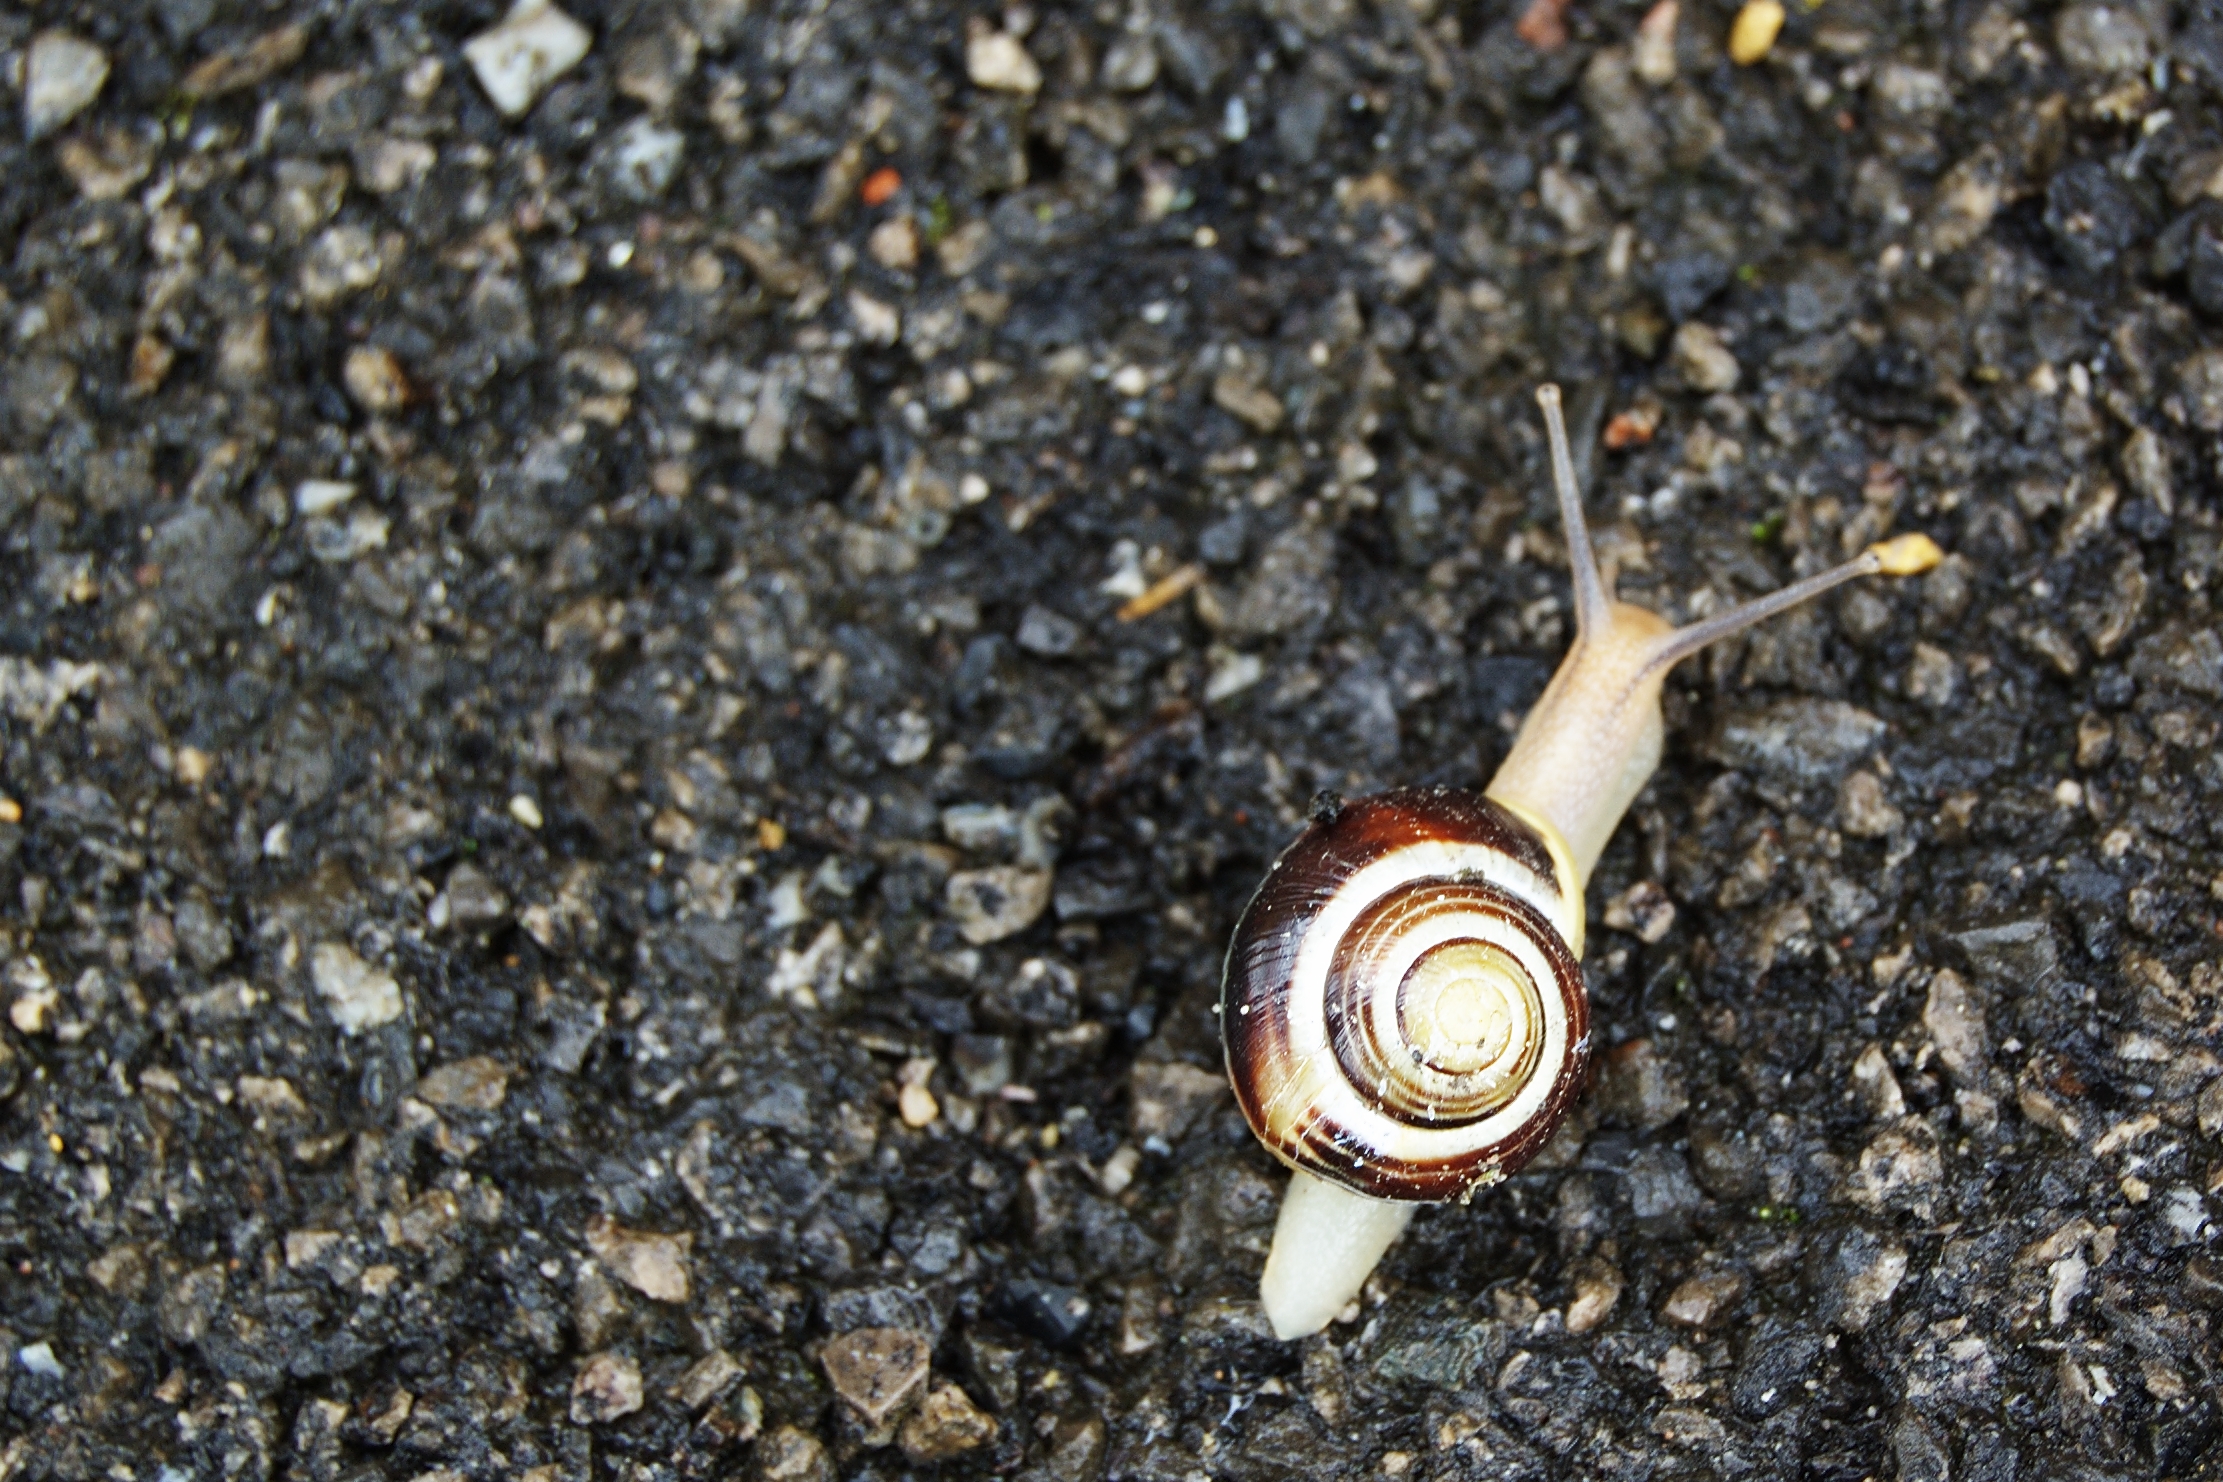 Snail at Walkley, Sheffield, crawling across stones.